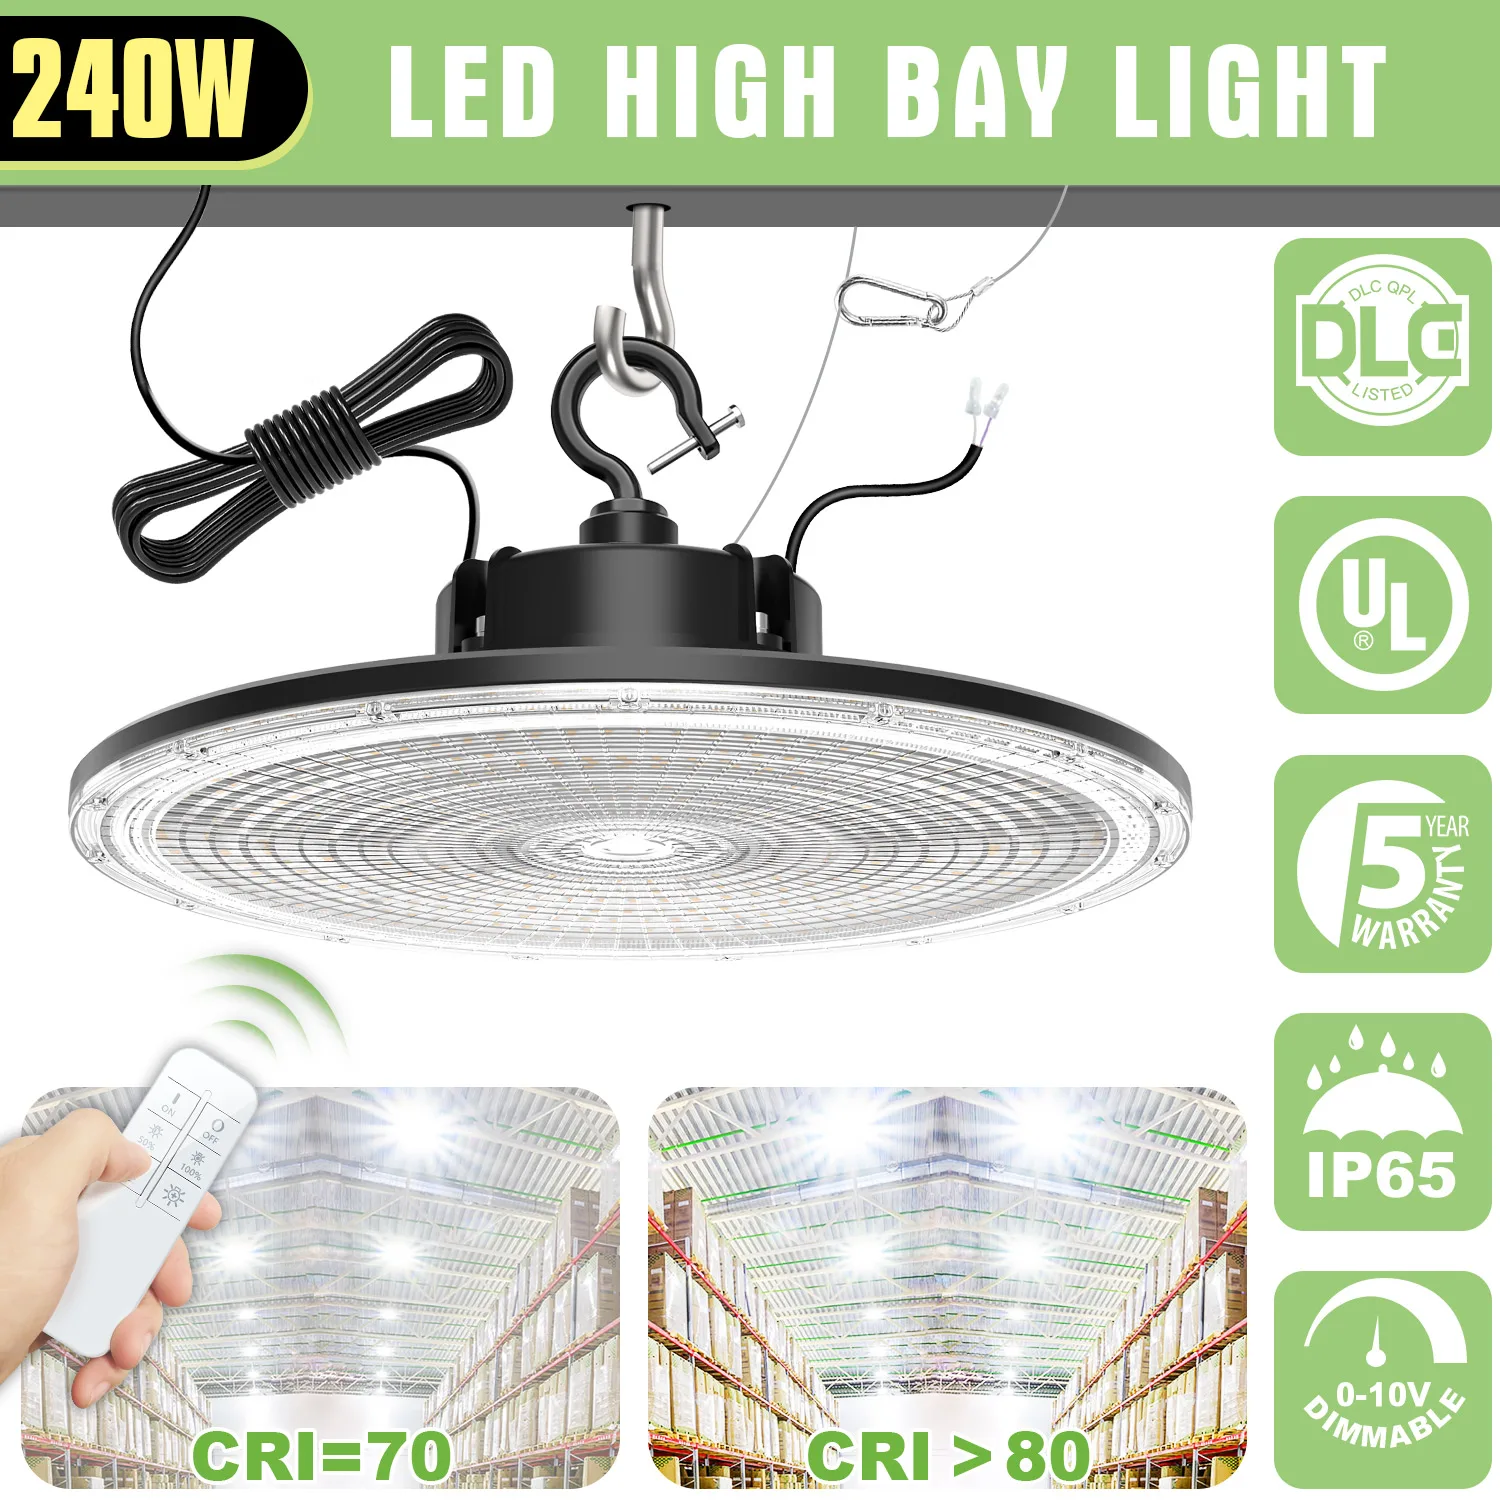 

Ngtlight UFO LED High Bay Light 100W 150W 200W 240W AC100-277V IP65 Waterproof Warehouse Garage Commercial Industrial Lighting